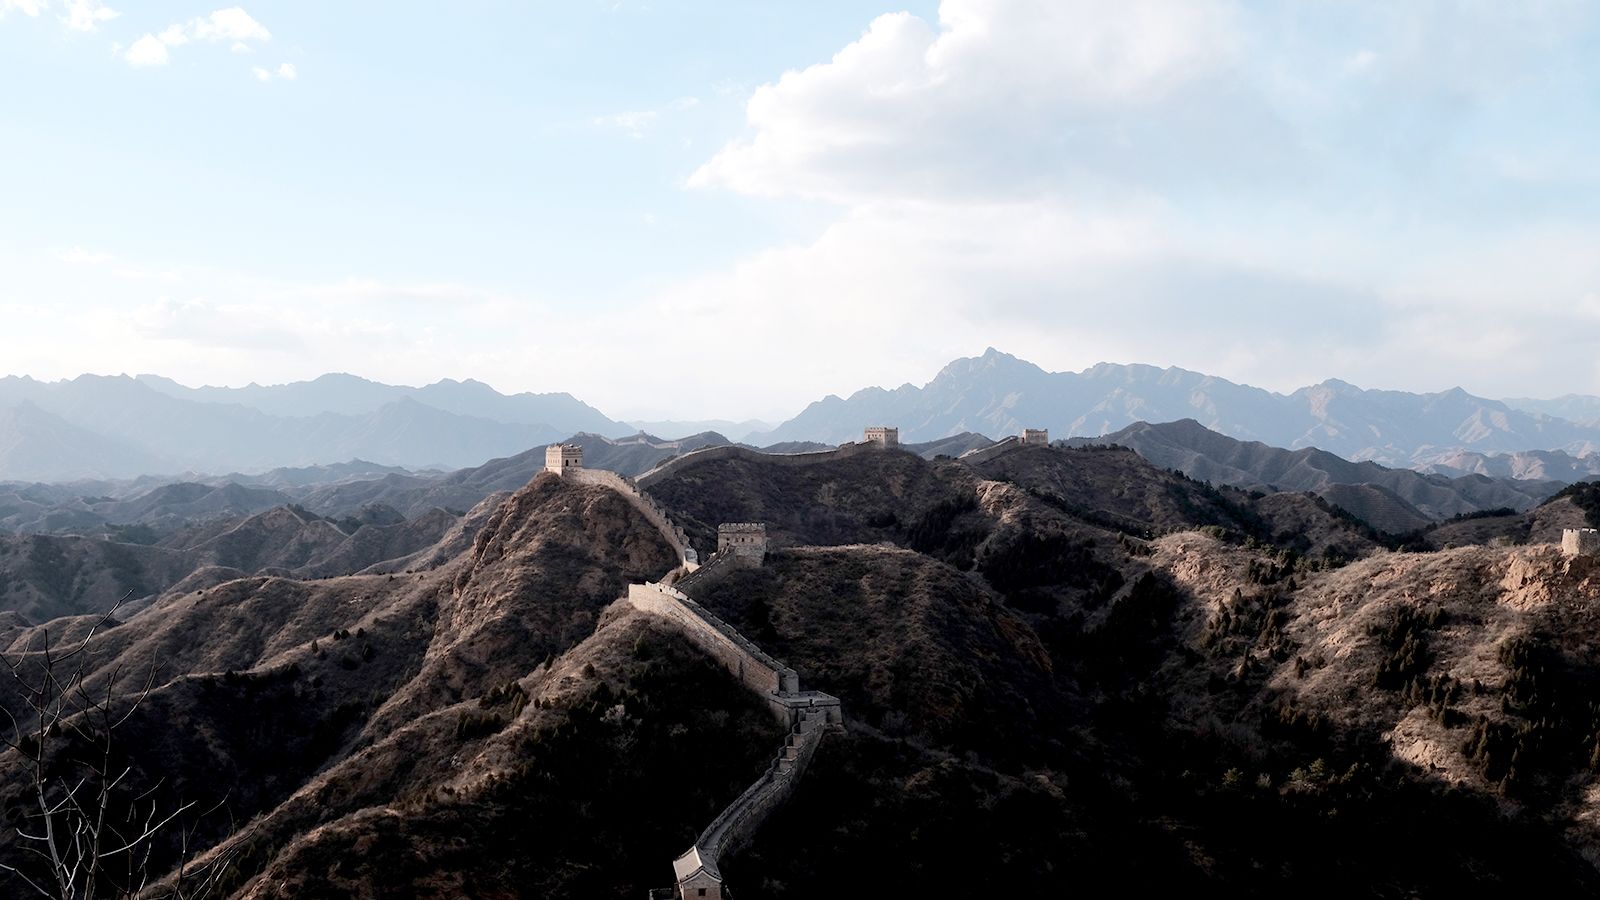 Walk the Great Wall of China